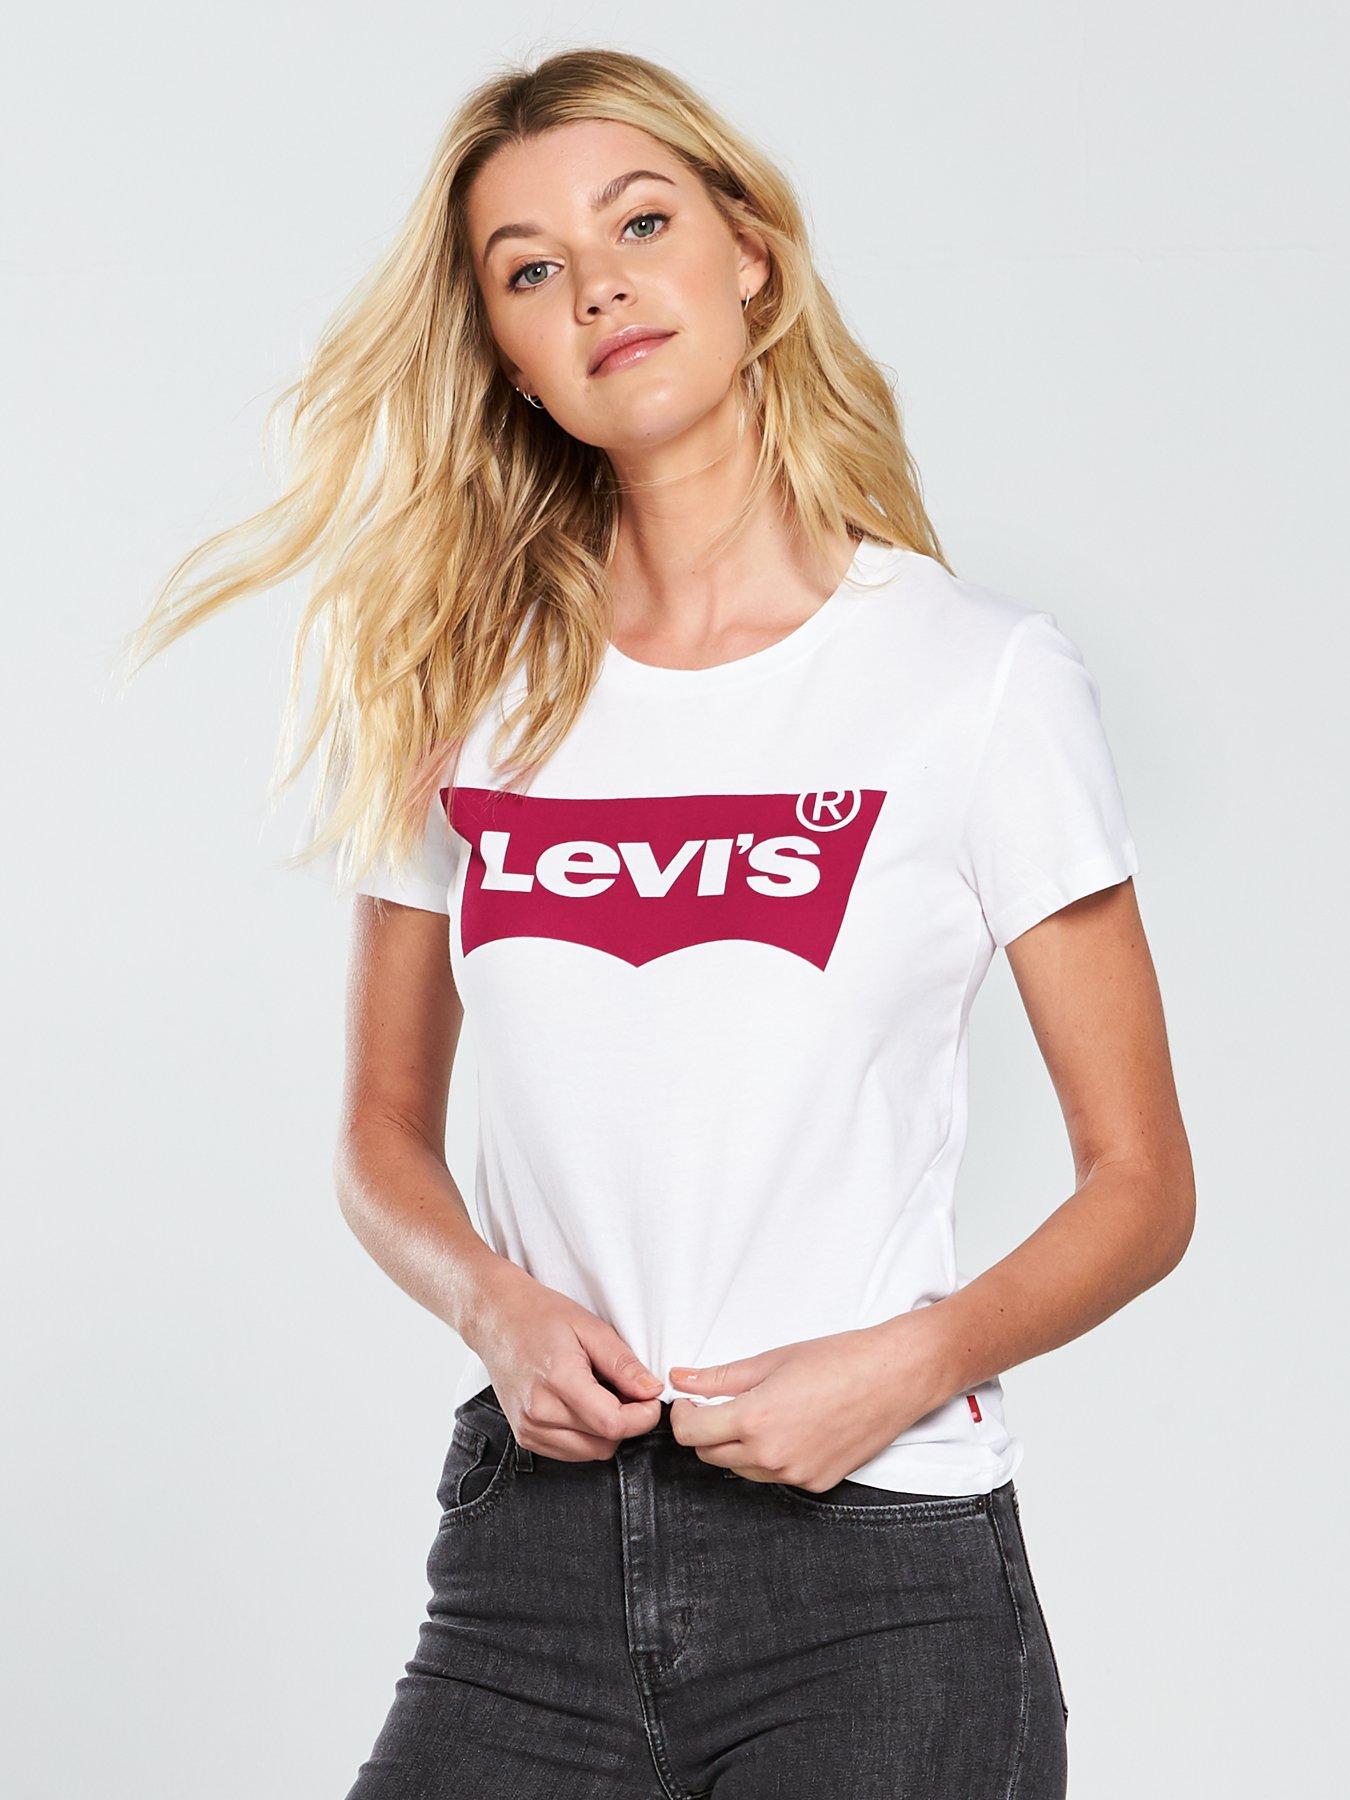 levis white tshirt women